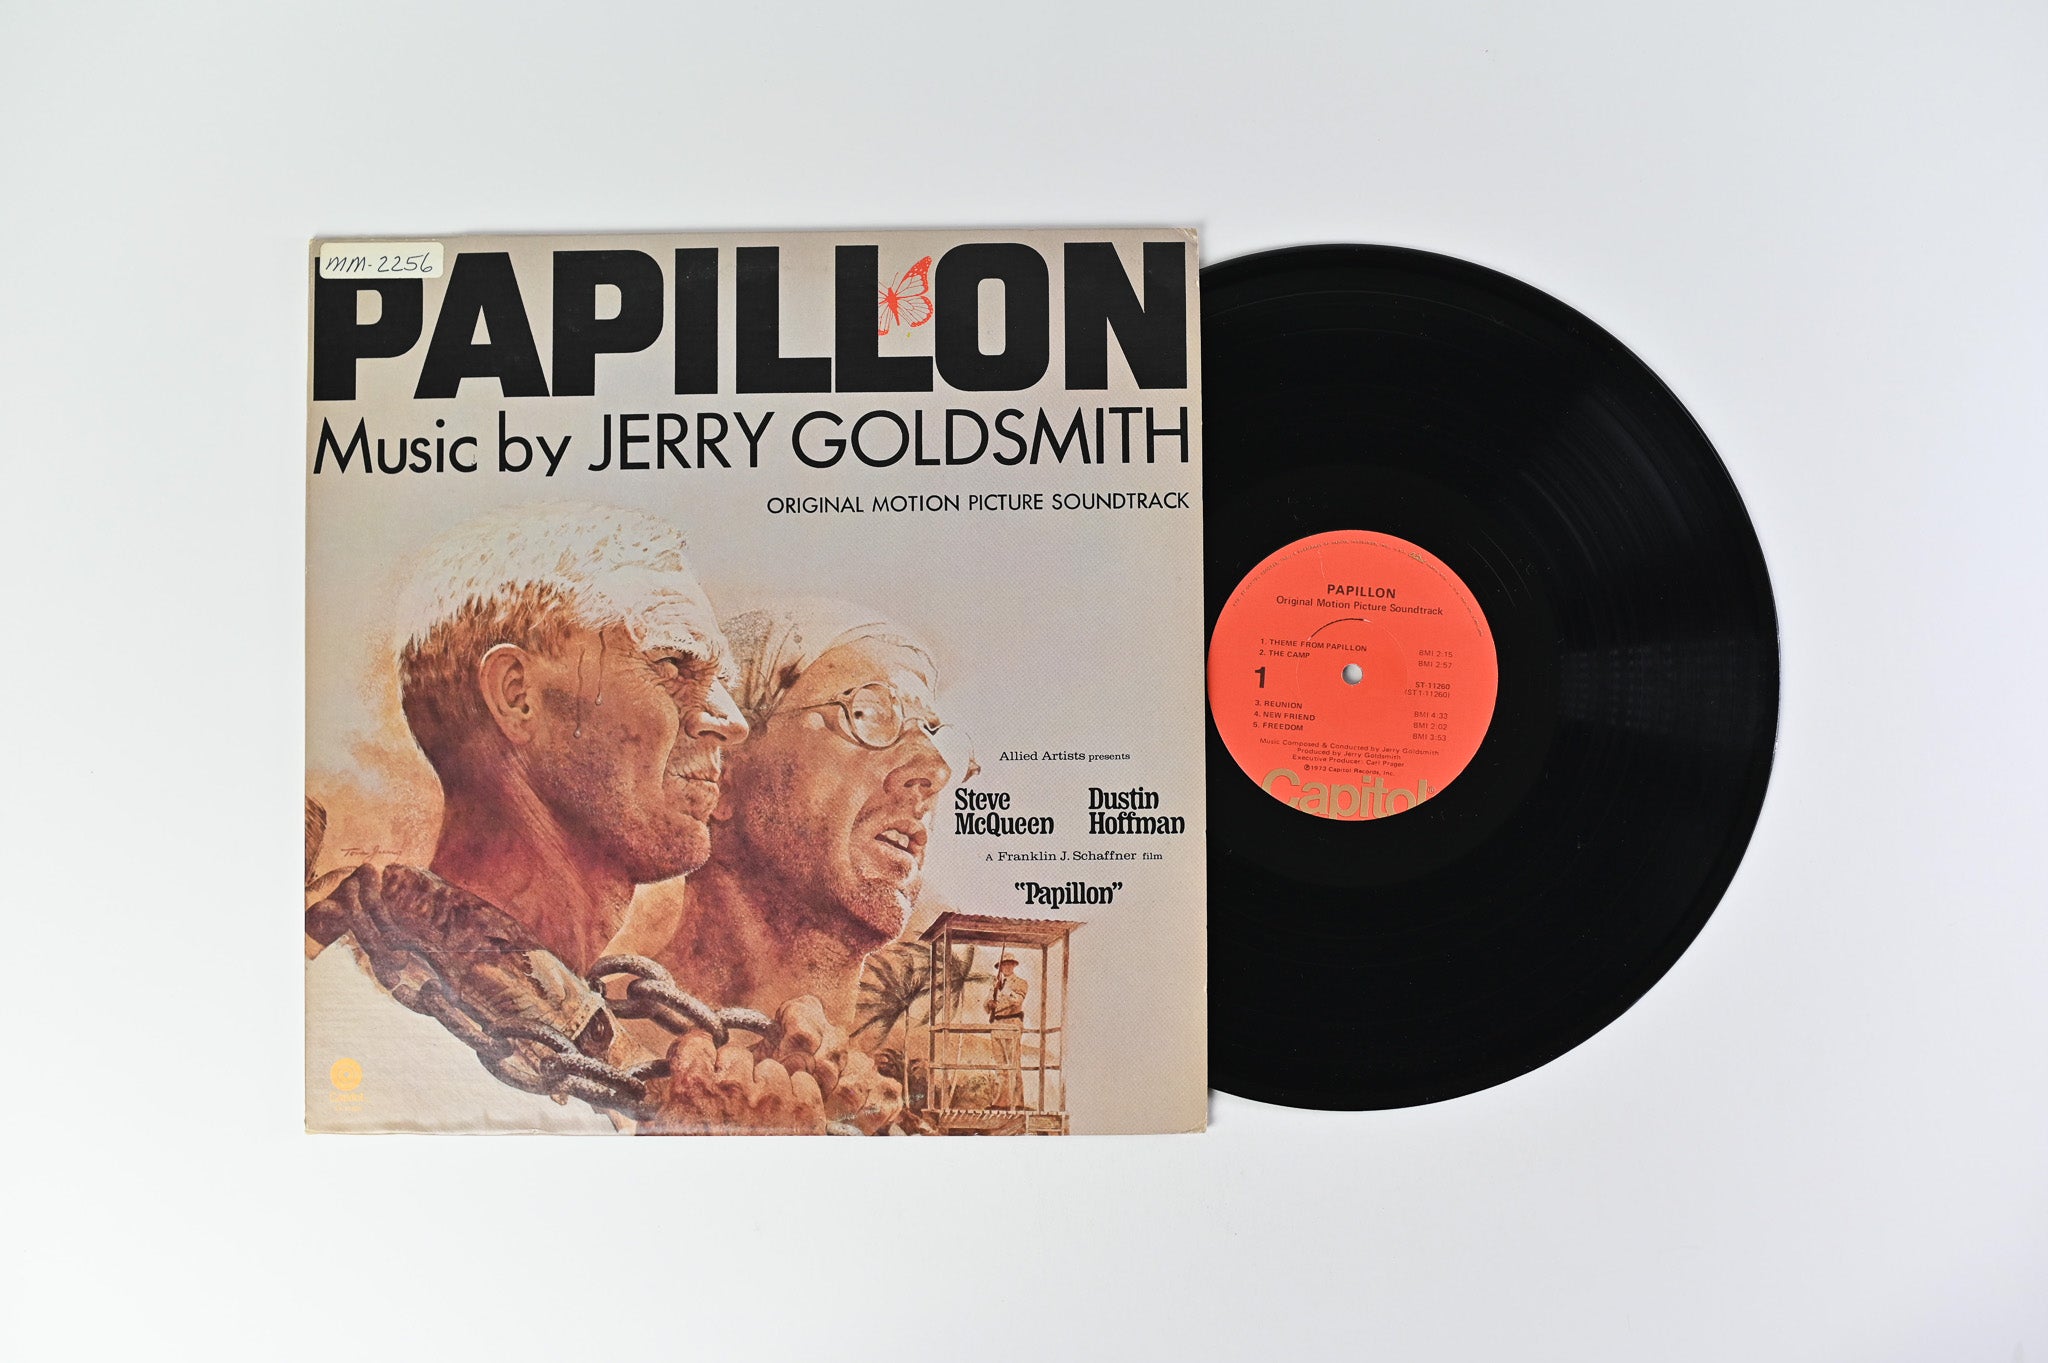 Jerry Goldsmith - Papillon (Original Motion Picture Soundtrack) on Capitol Records